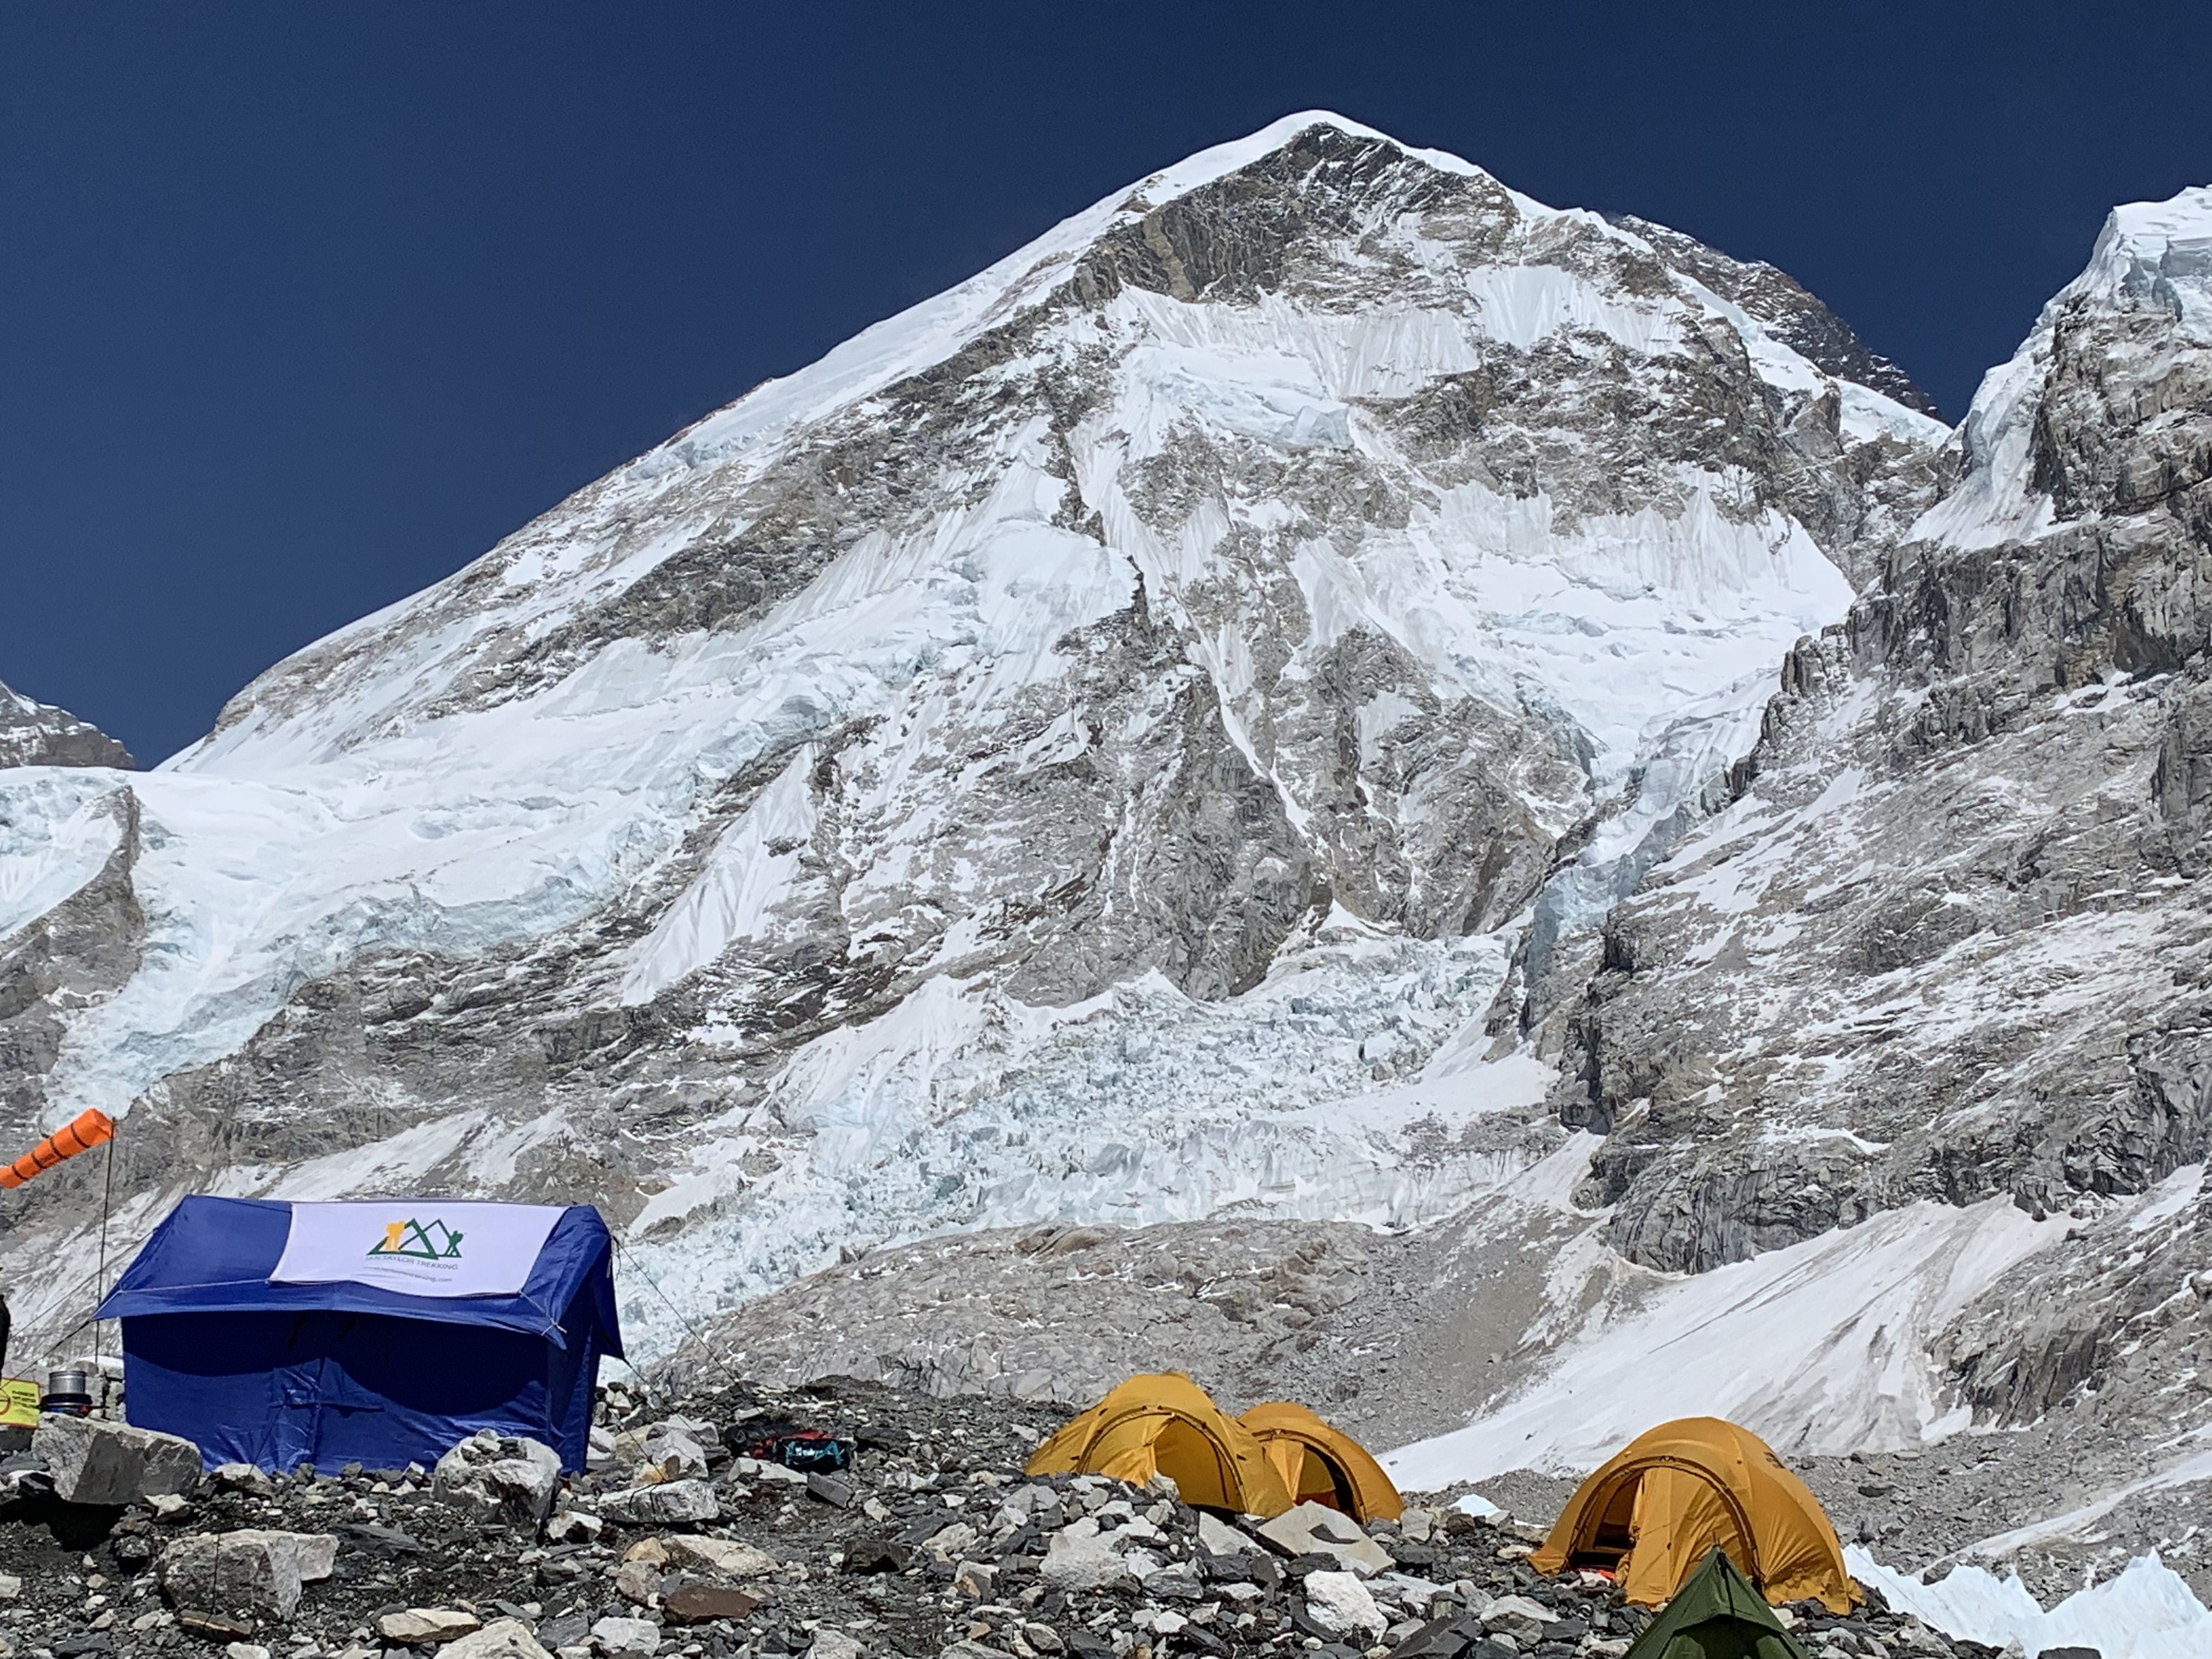 Sleeping at Everest Base Camp